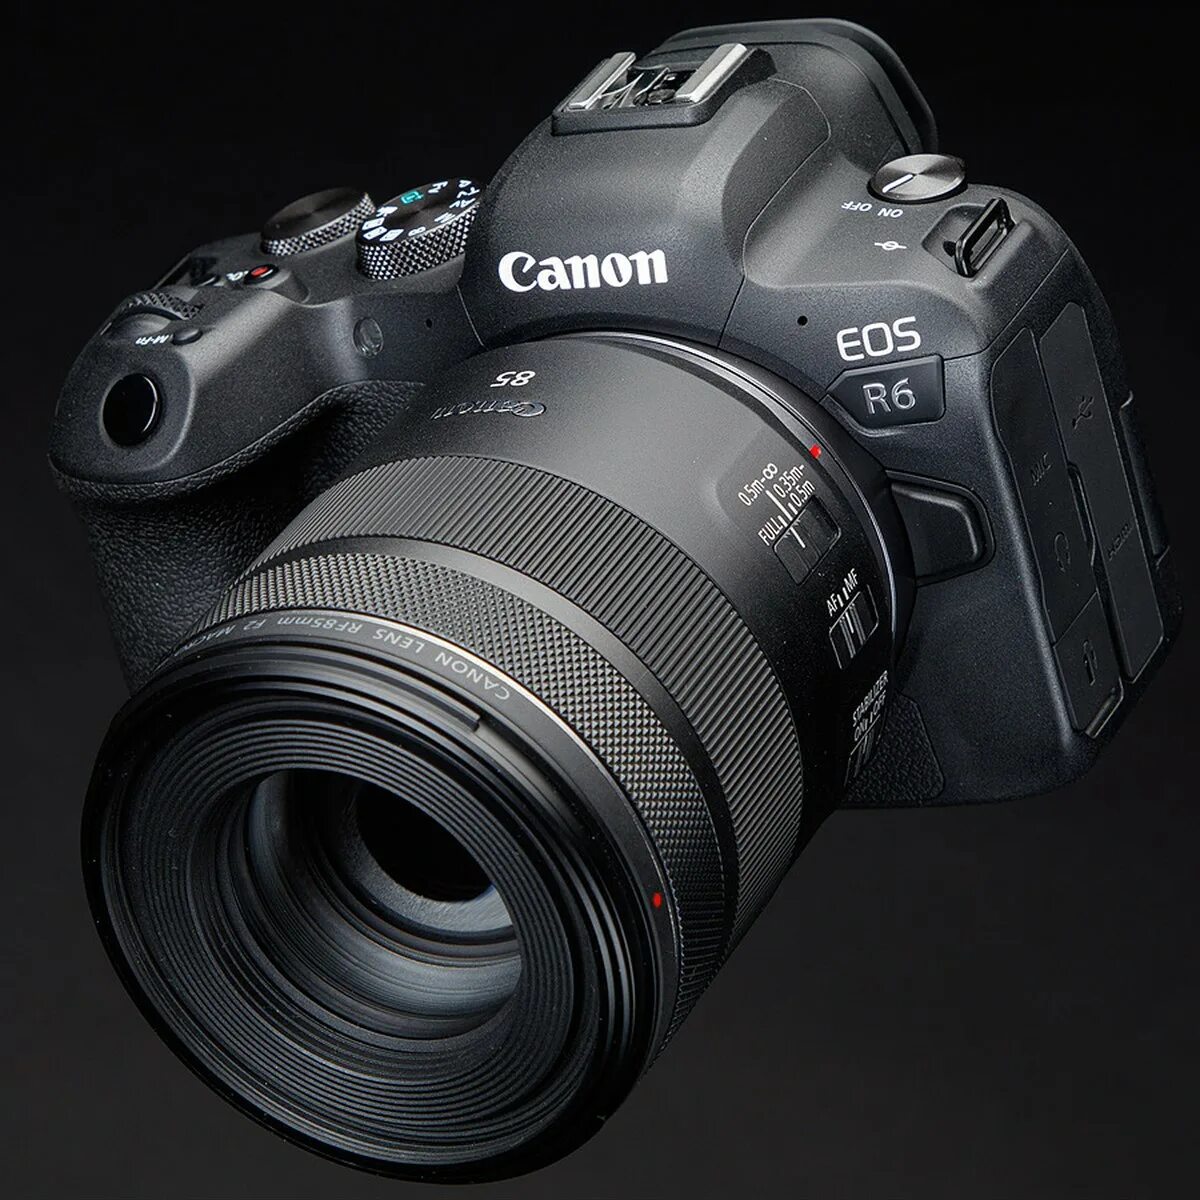 Санон. Canon EOS r6. R6 фотоаппарат Canon EOS. Canon EOS r6 Kit. Canon EOS r6 body.